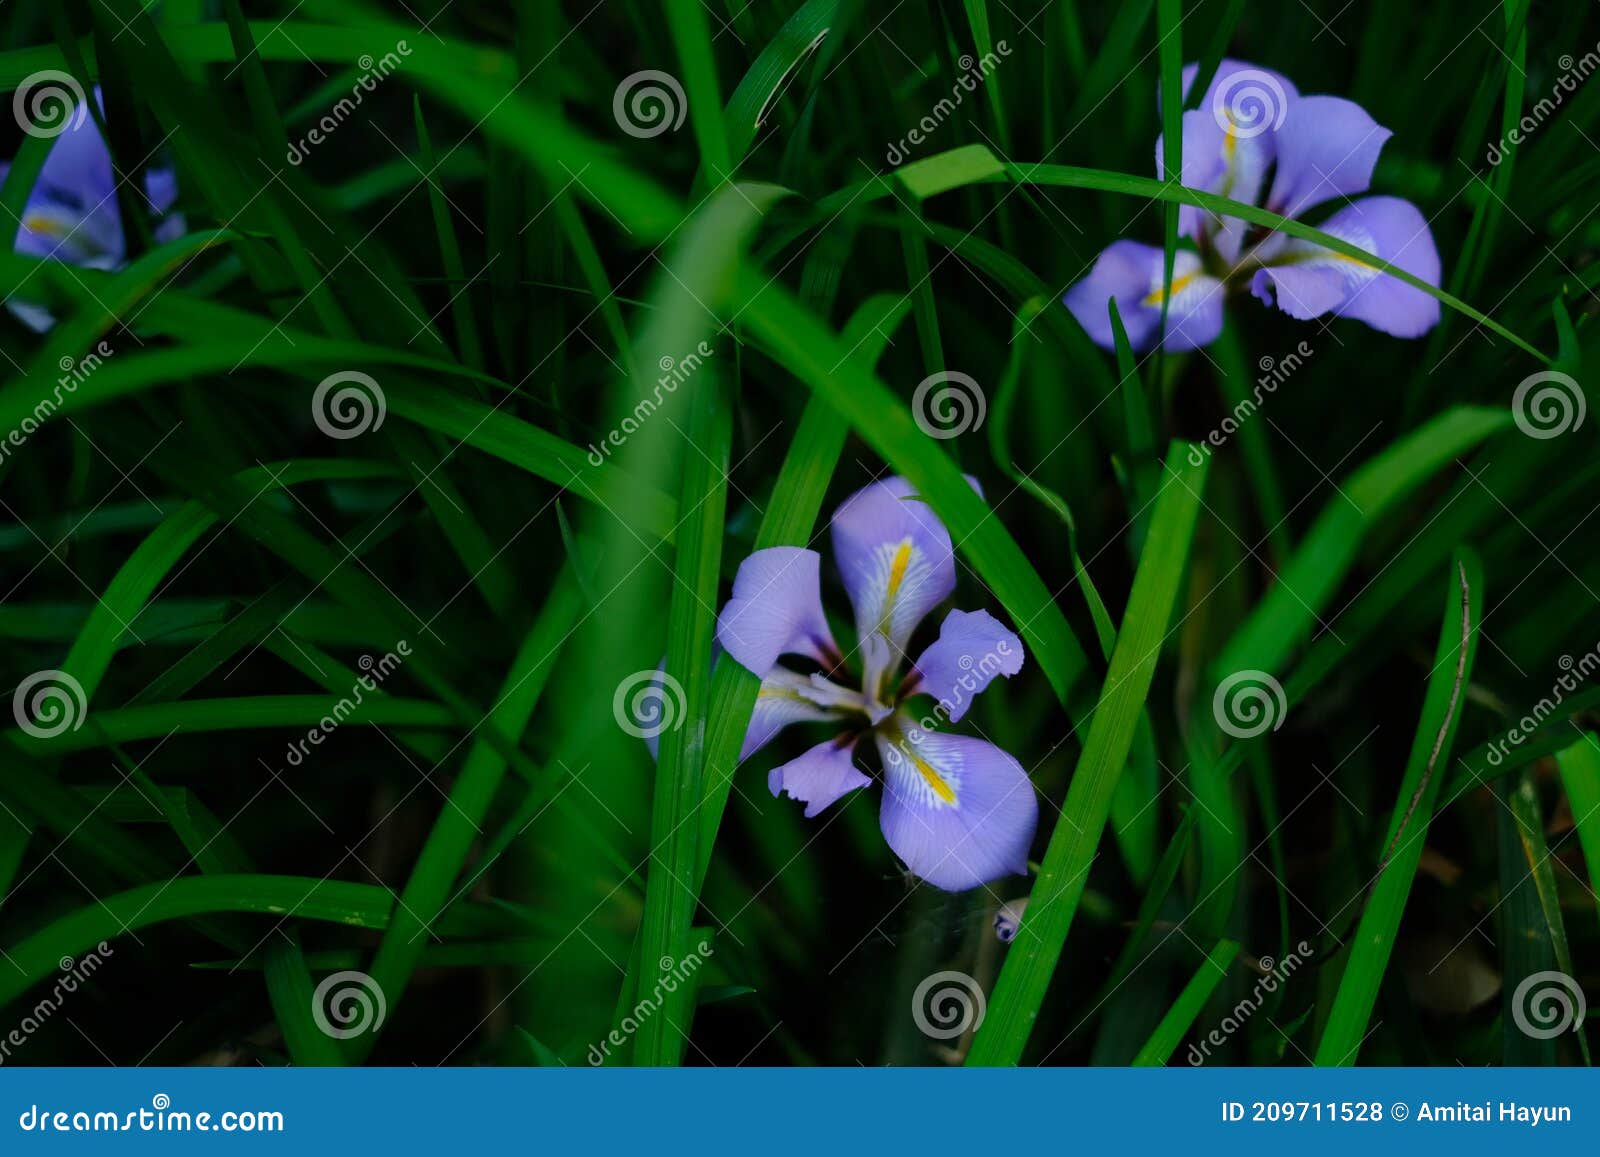 purple iris and green grass